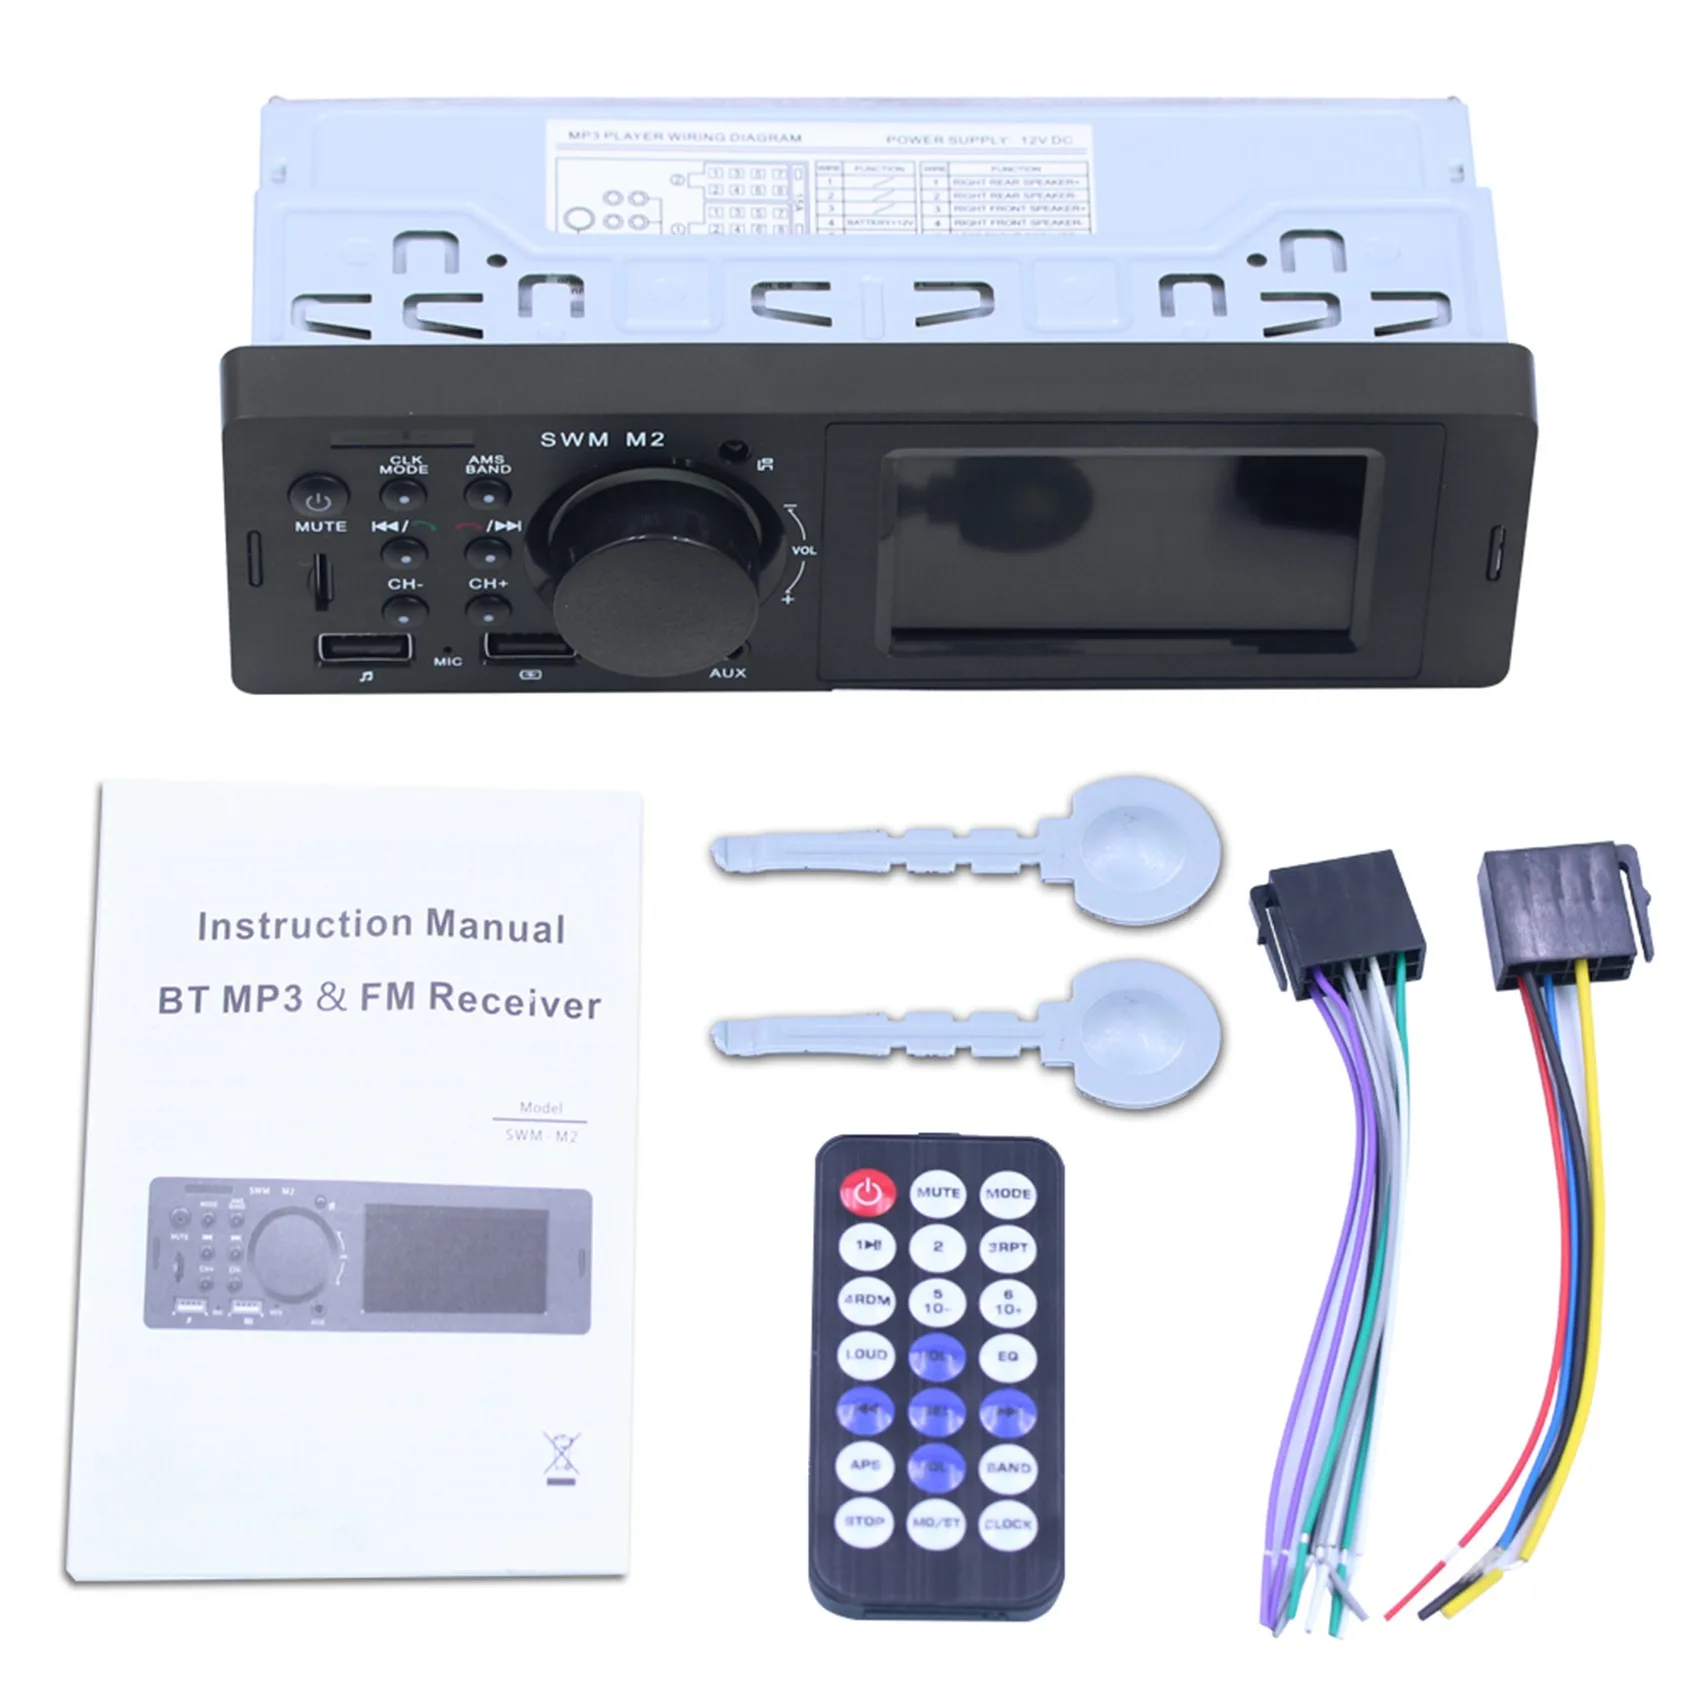 

Автомагнитола 1 DIN, Bluetooth, USB, SD, AUX, FM, MP3-плеер, тип ПК:-M2